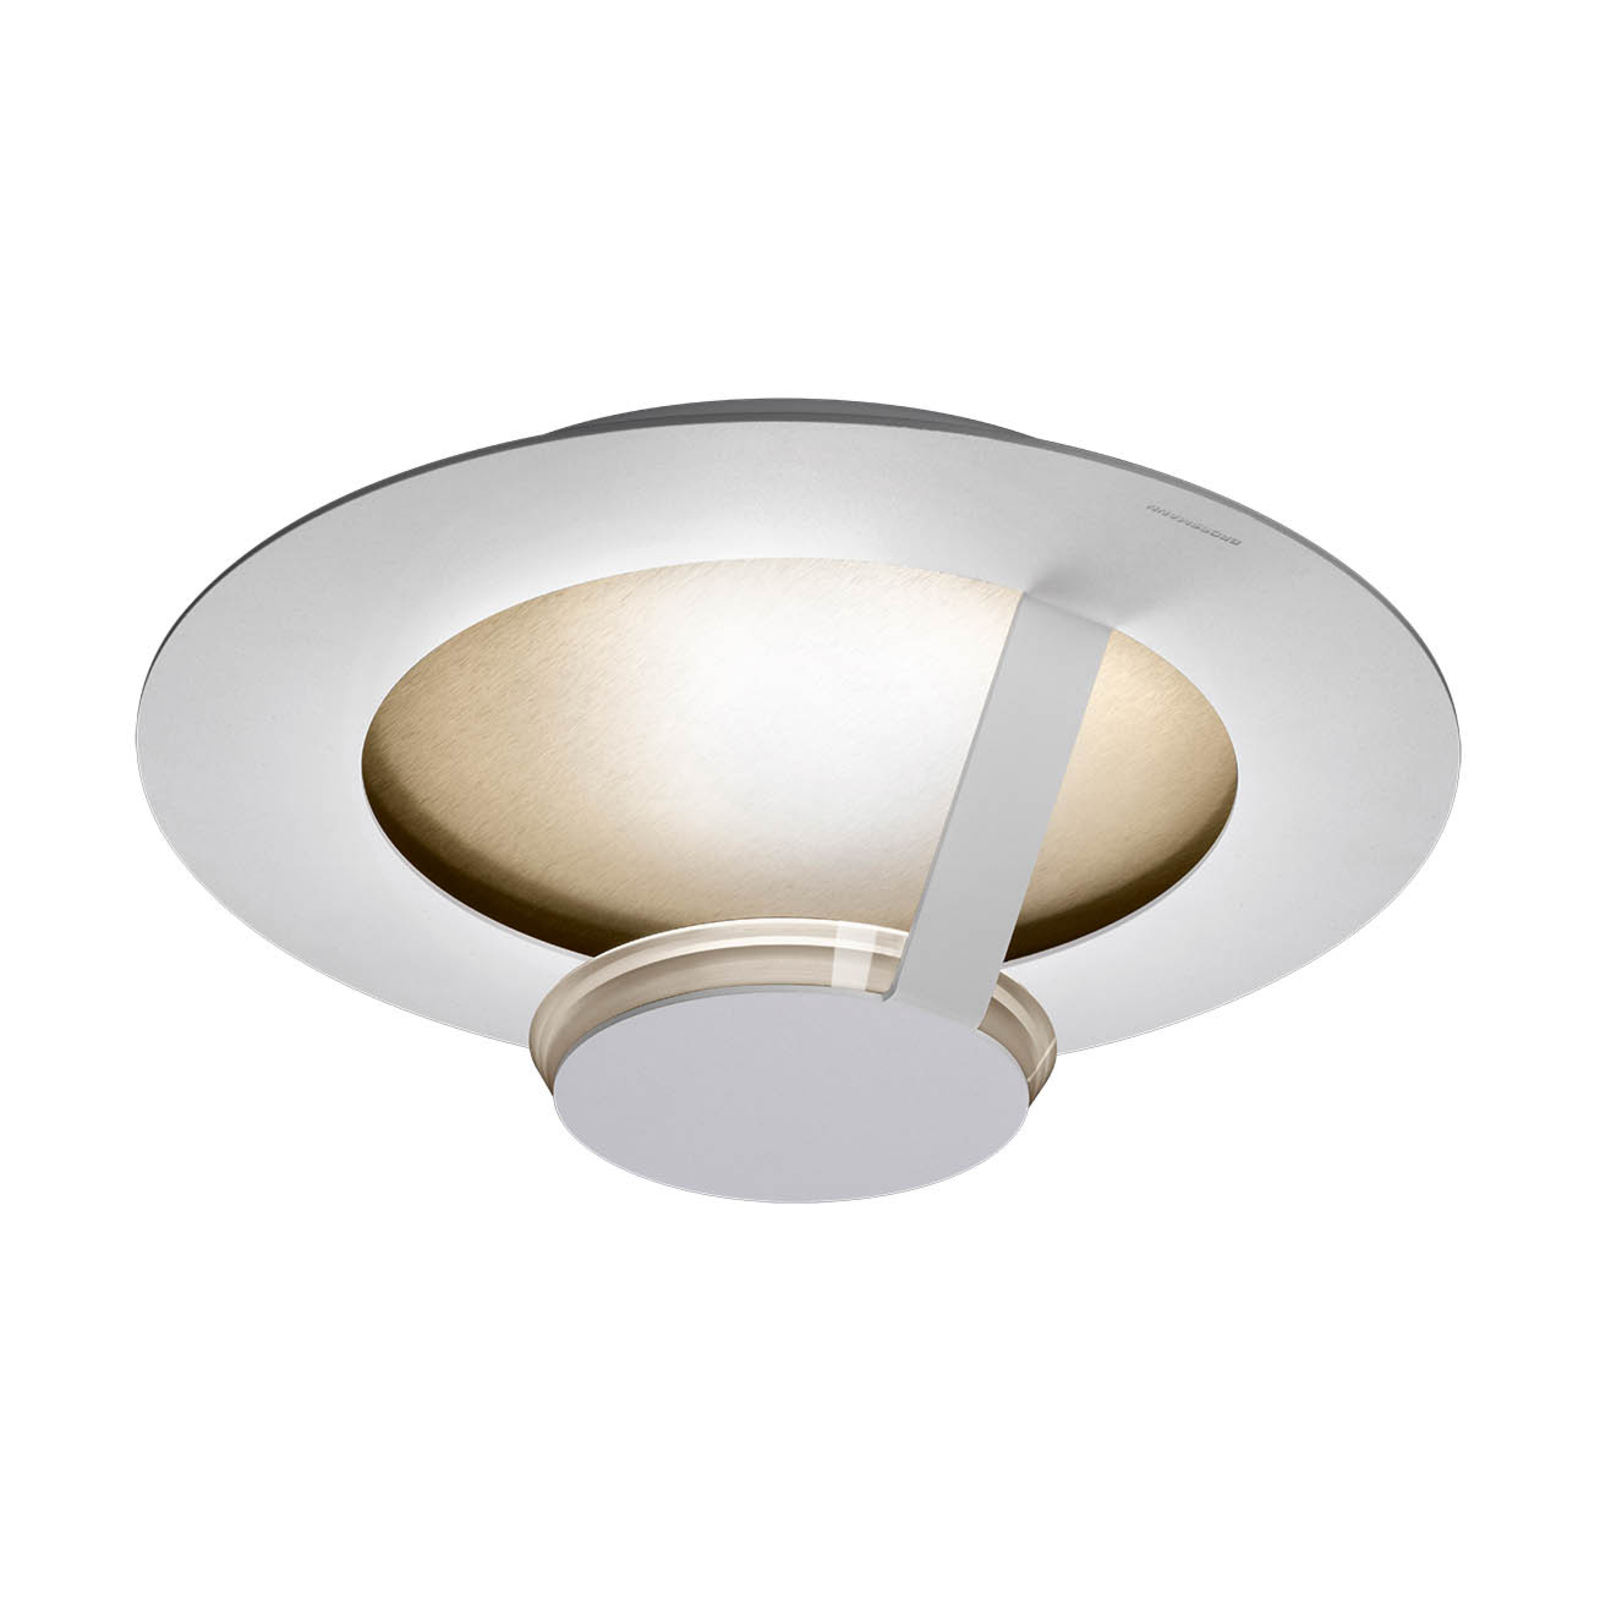 Onze onderneming Bekwaamheid Overweldigend GROSSMANN Flat LED plafondlamp, wit-goudbruin | Lampen24.be